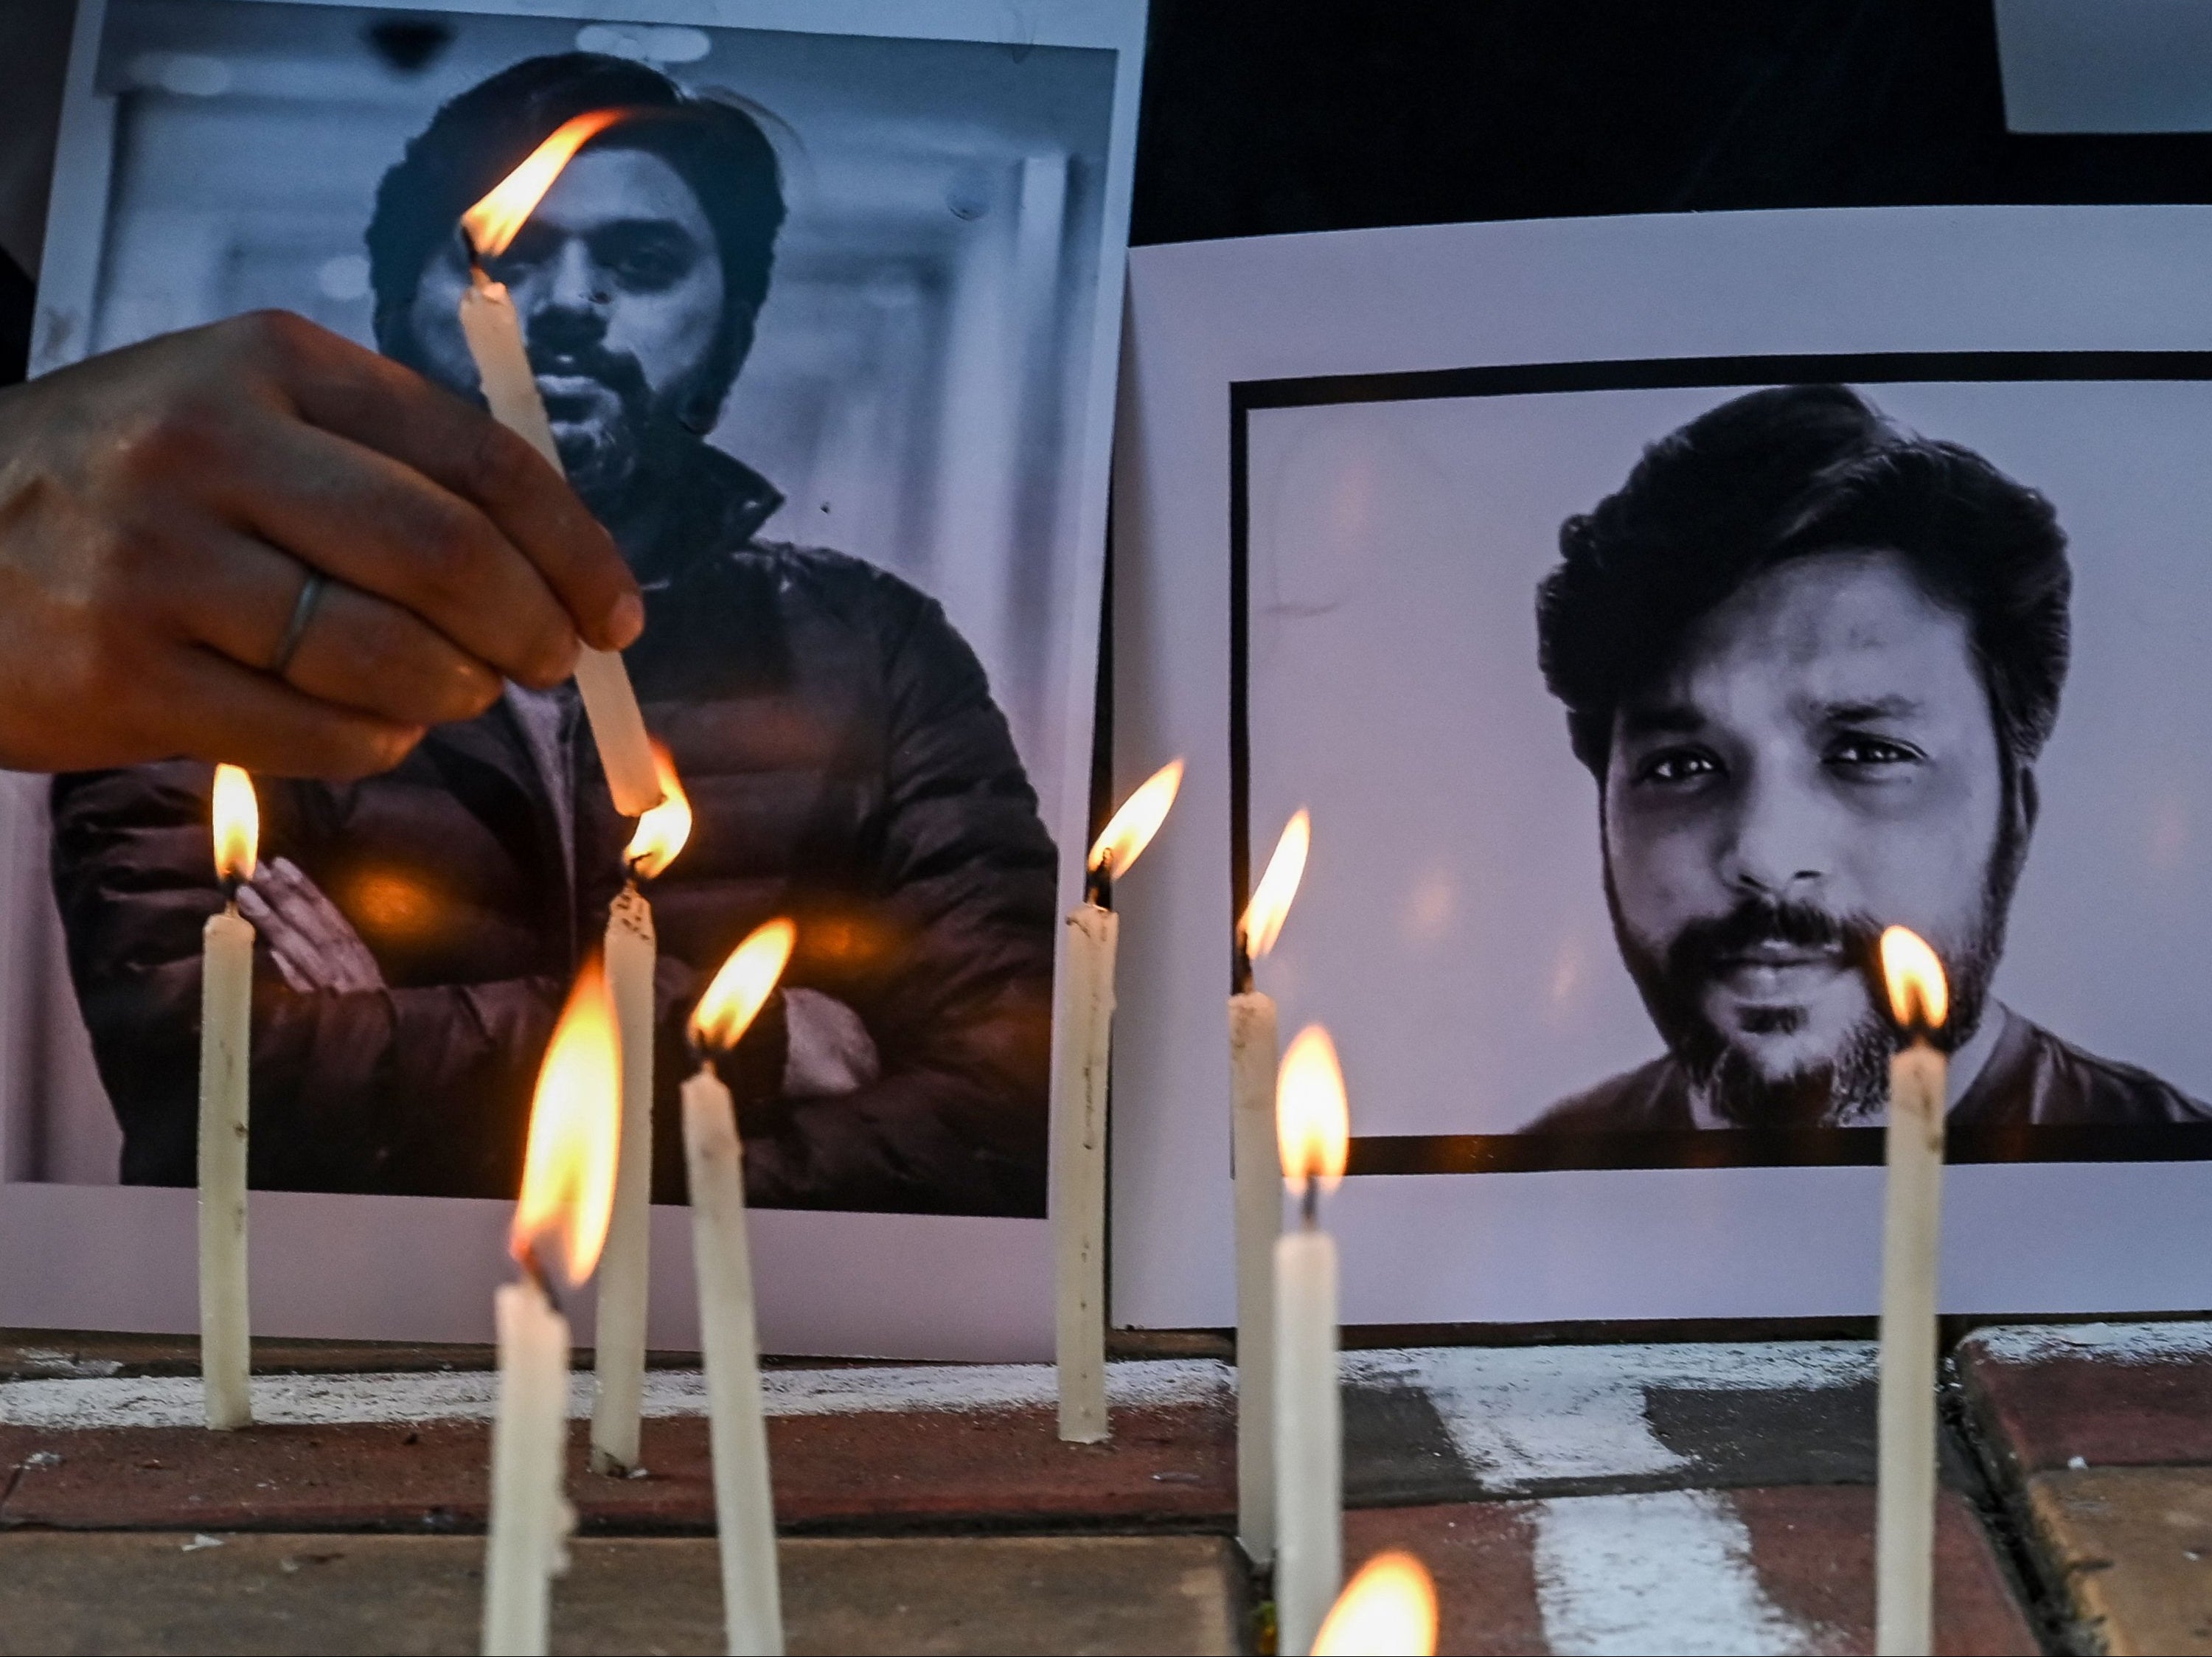 A tribute to Danish Siddiqui in Kolkata, India